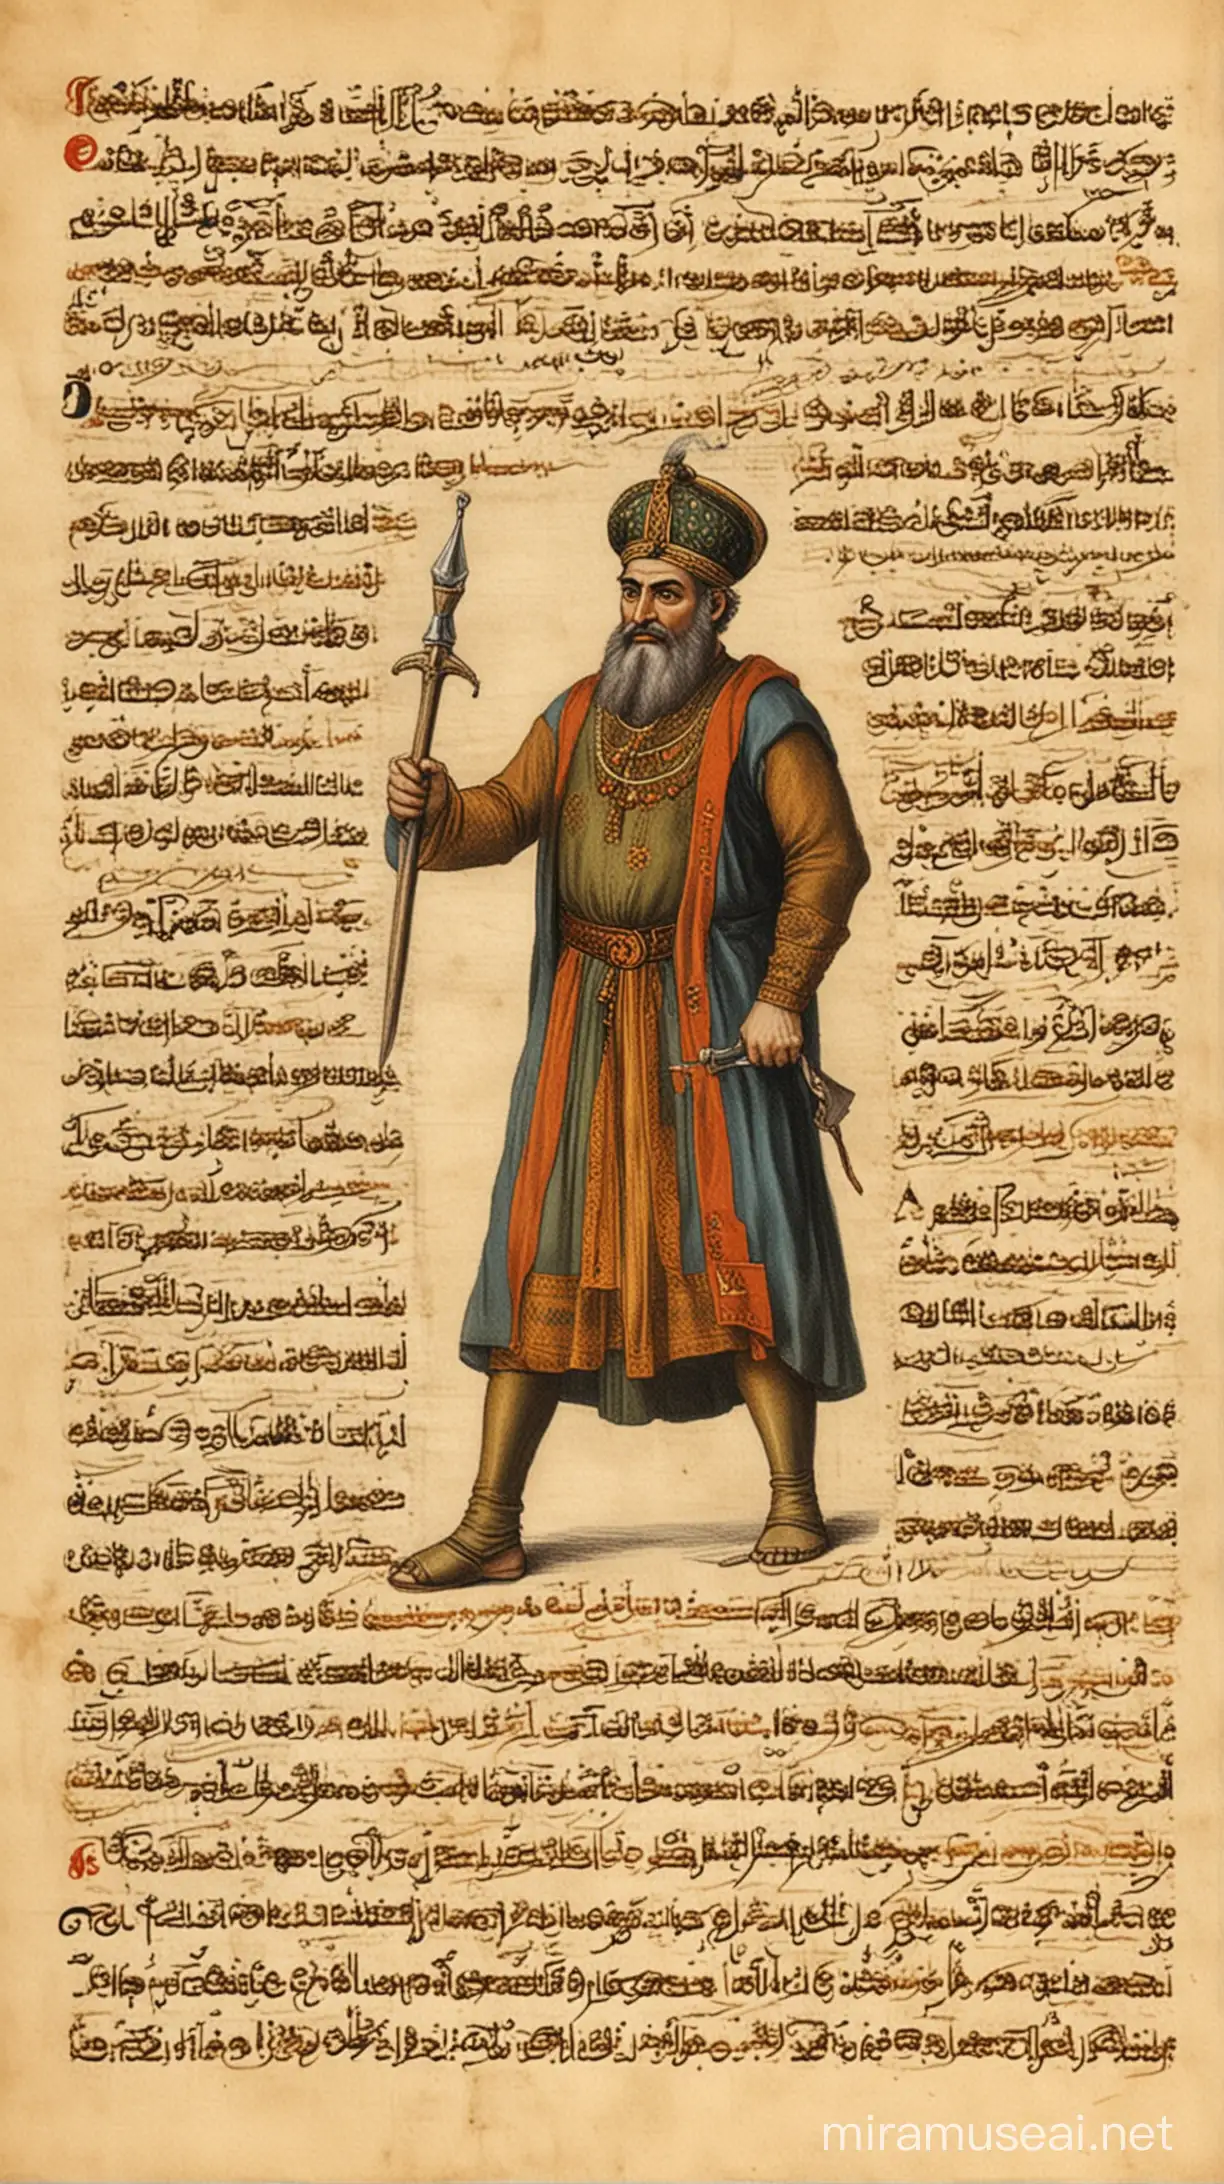 Historical Depiction Ibrahim I Portrayed as Mad